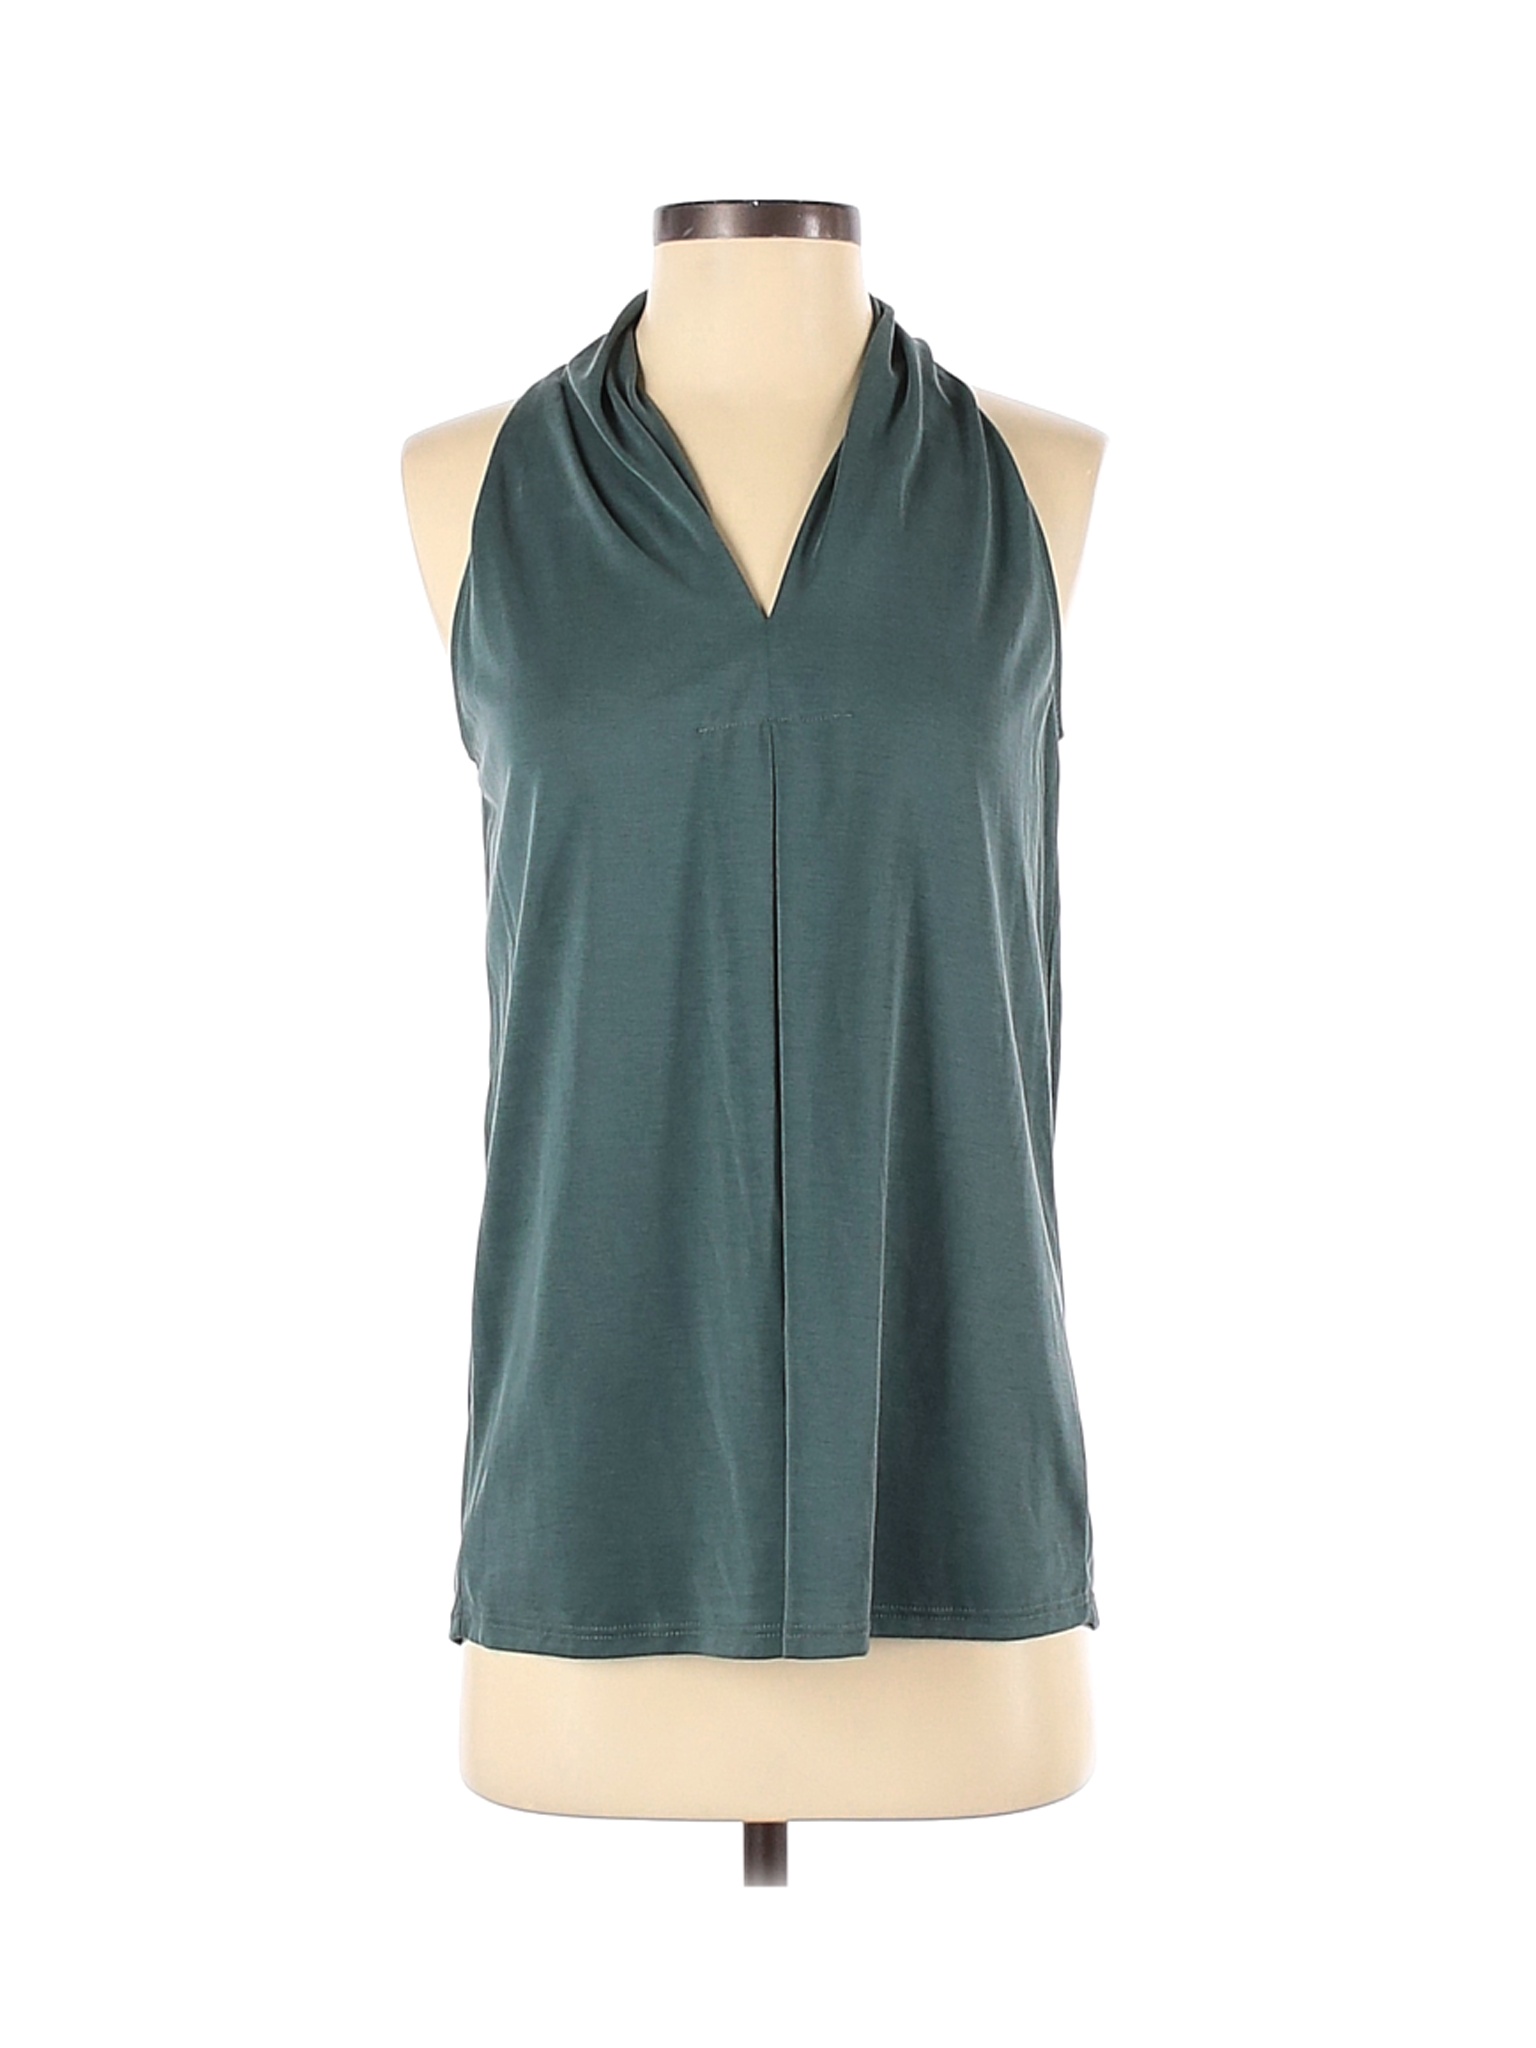 NWT Green Envelope Women Green Sleeveless Top S | eBay